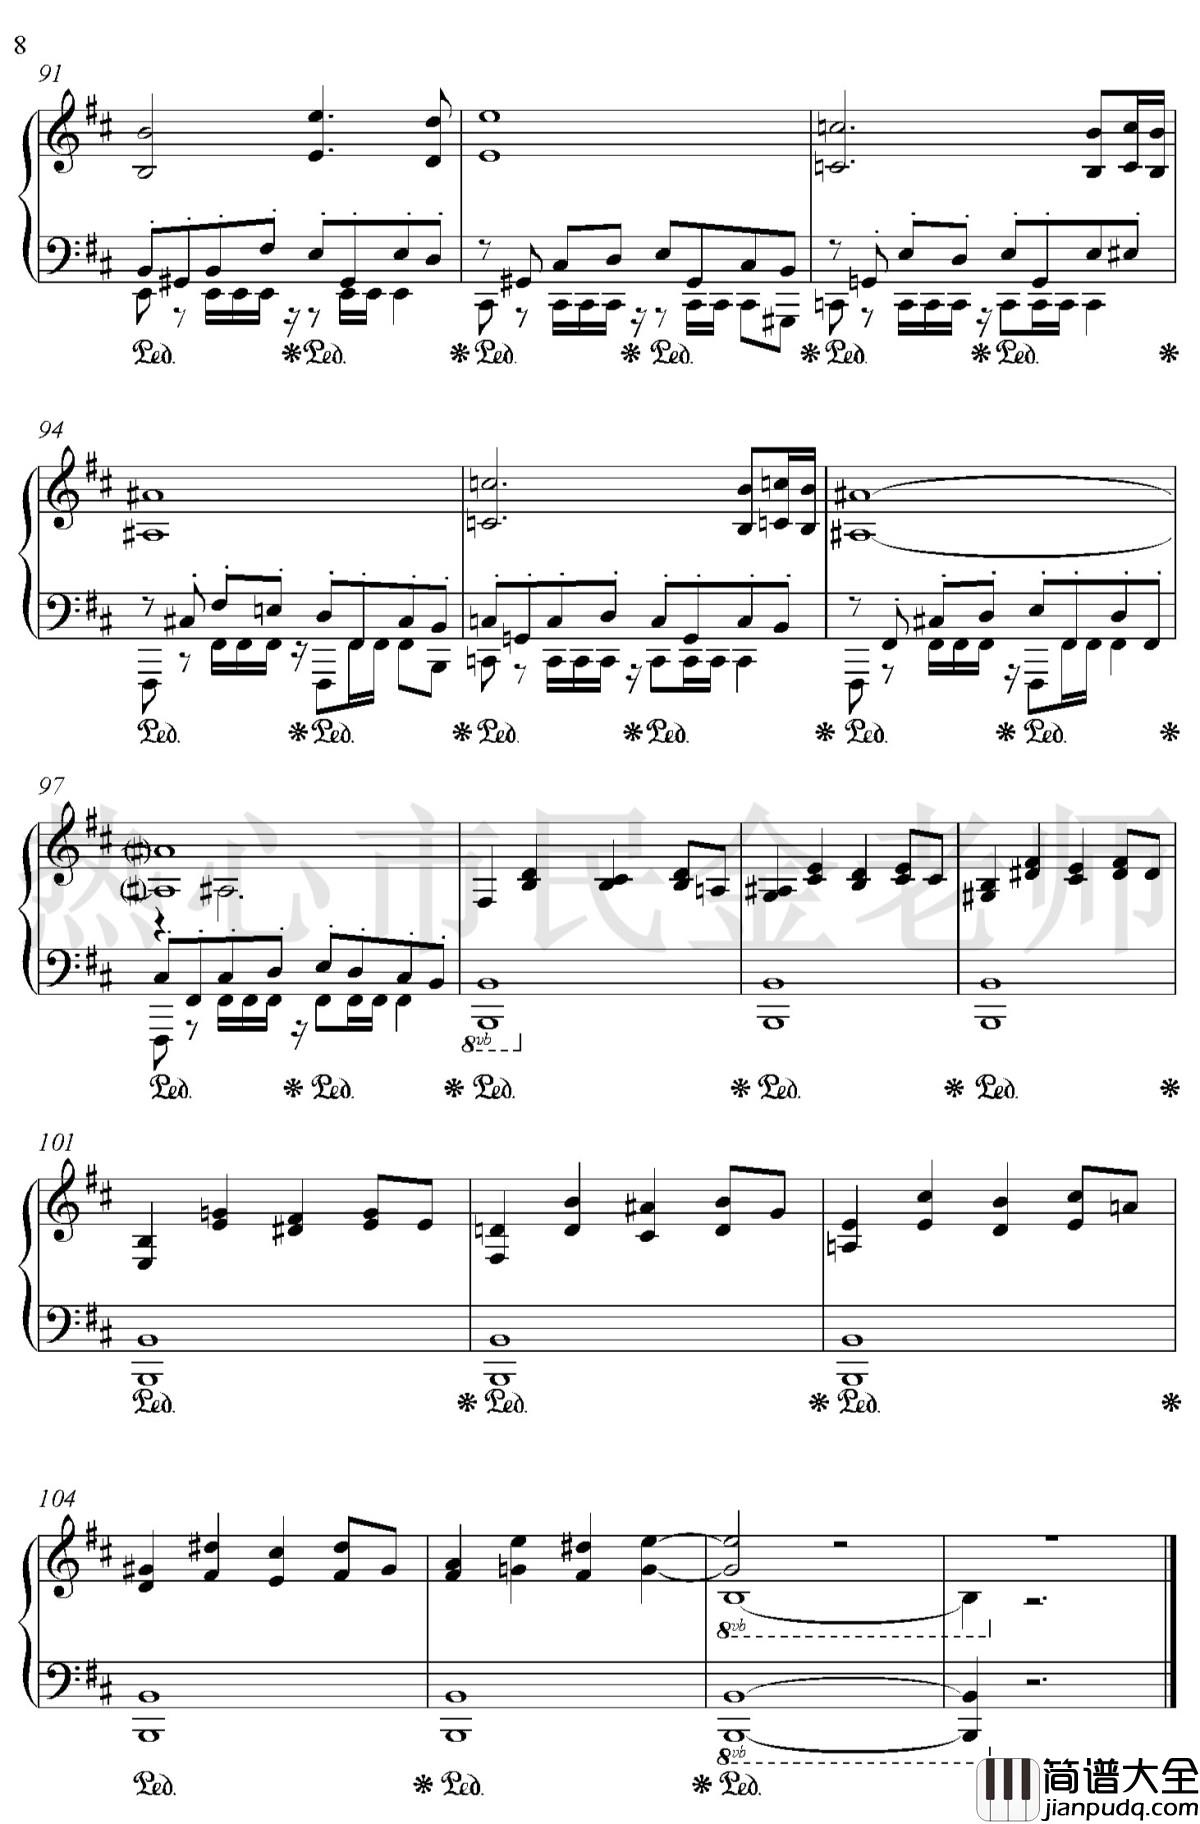 Main_Theme钢琴谱(王者荣耀主题曲）_金老师独奏190224